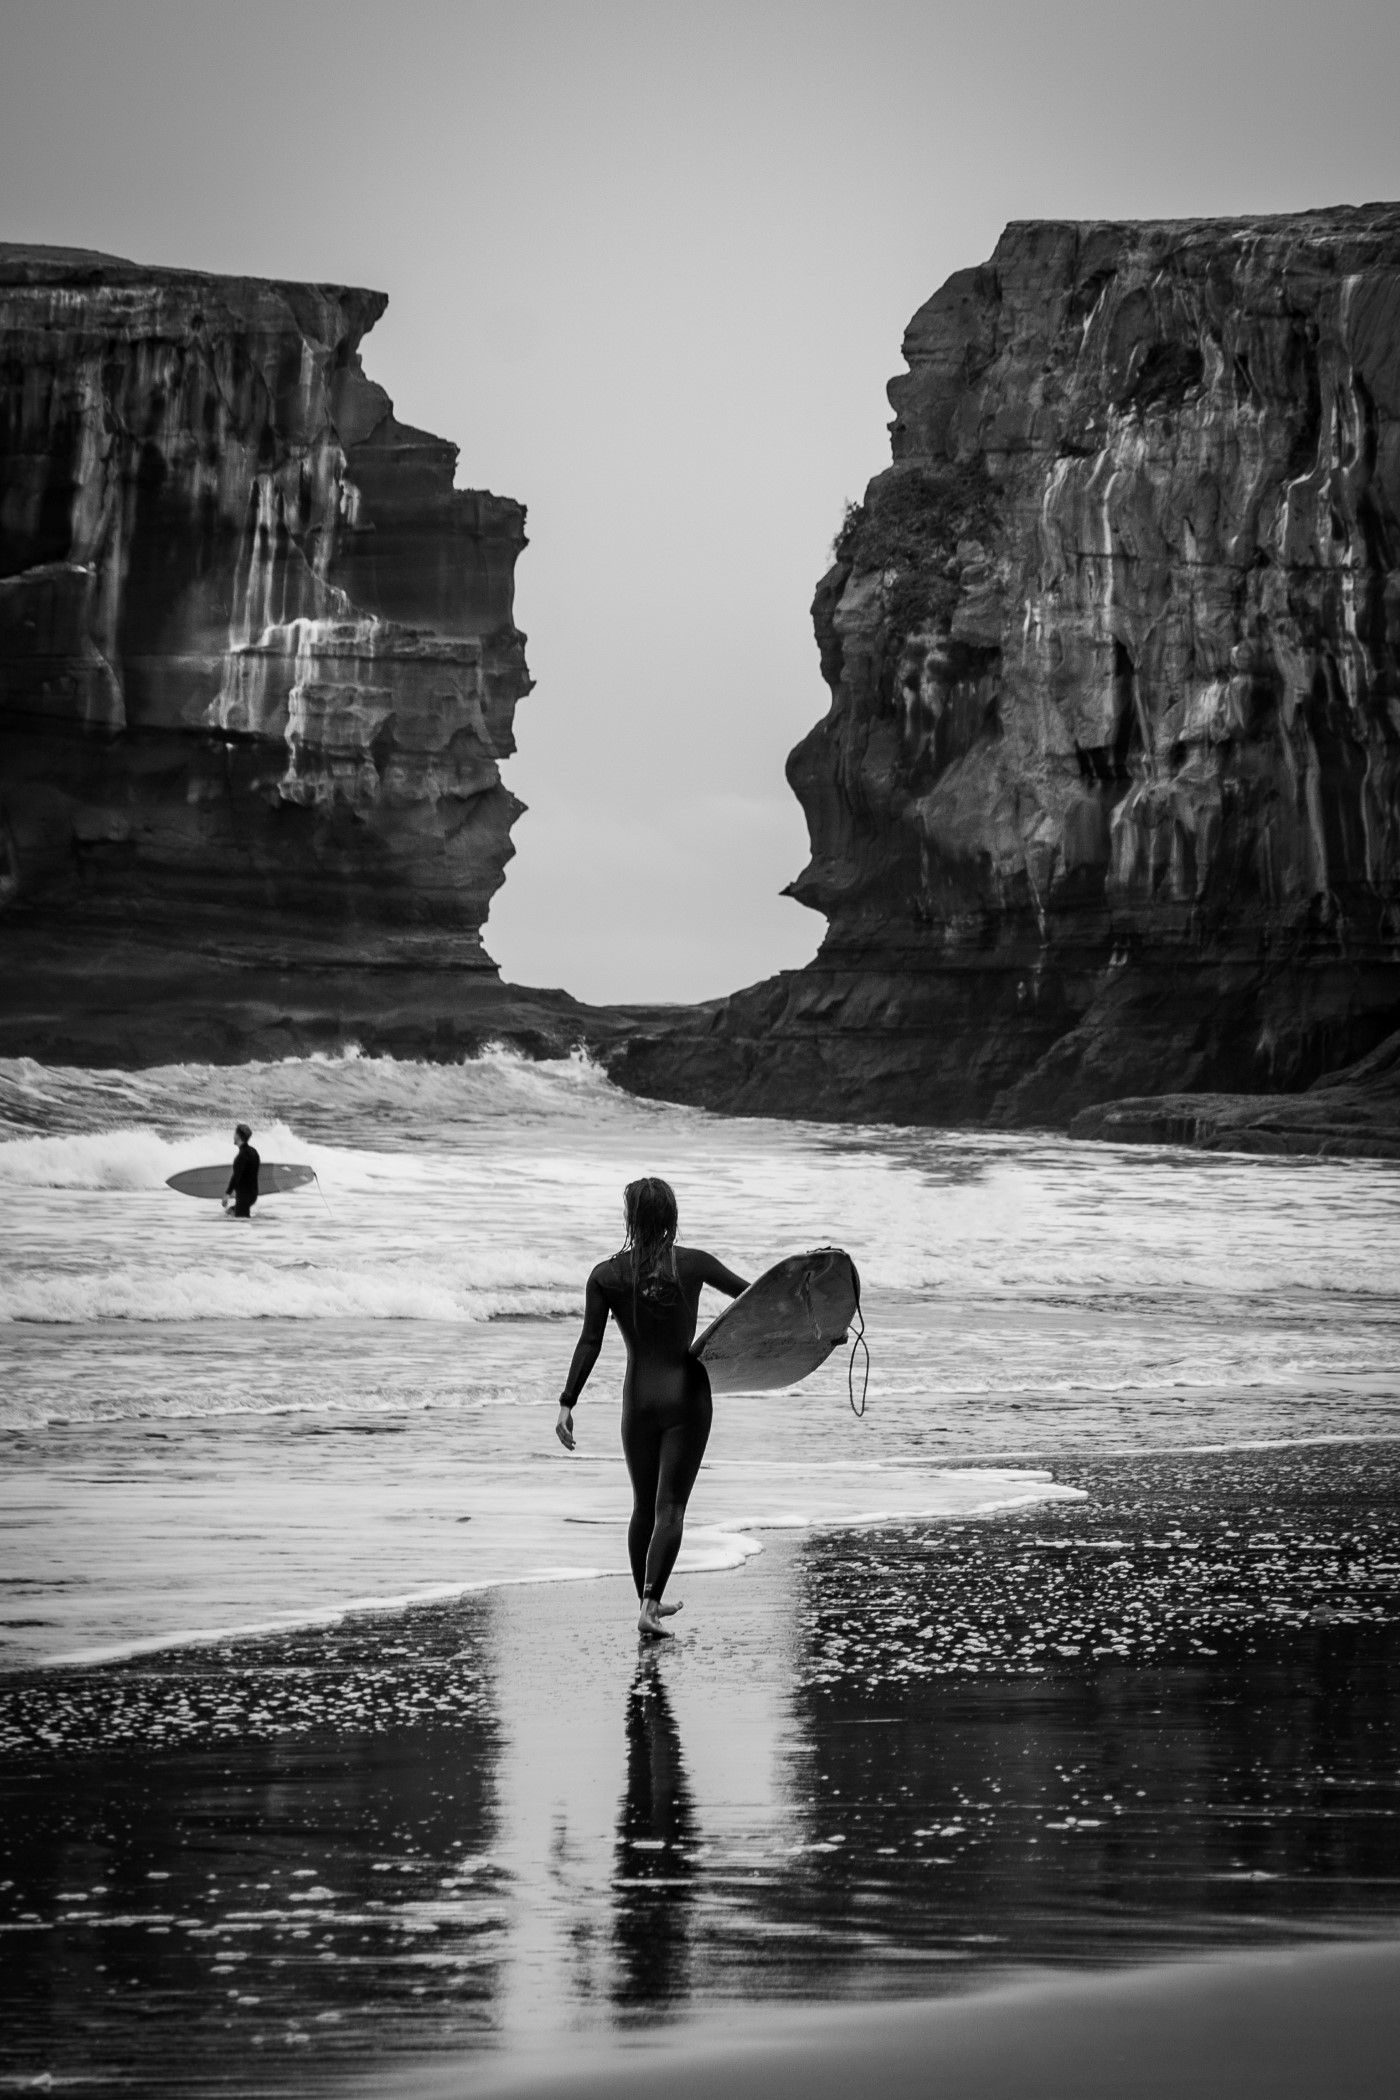 Eric Lee: Surfday